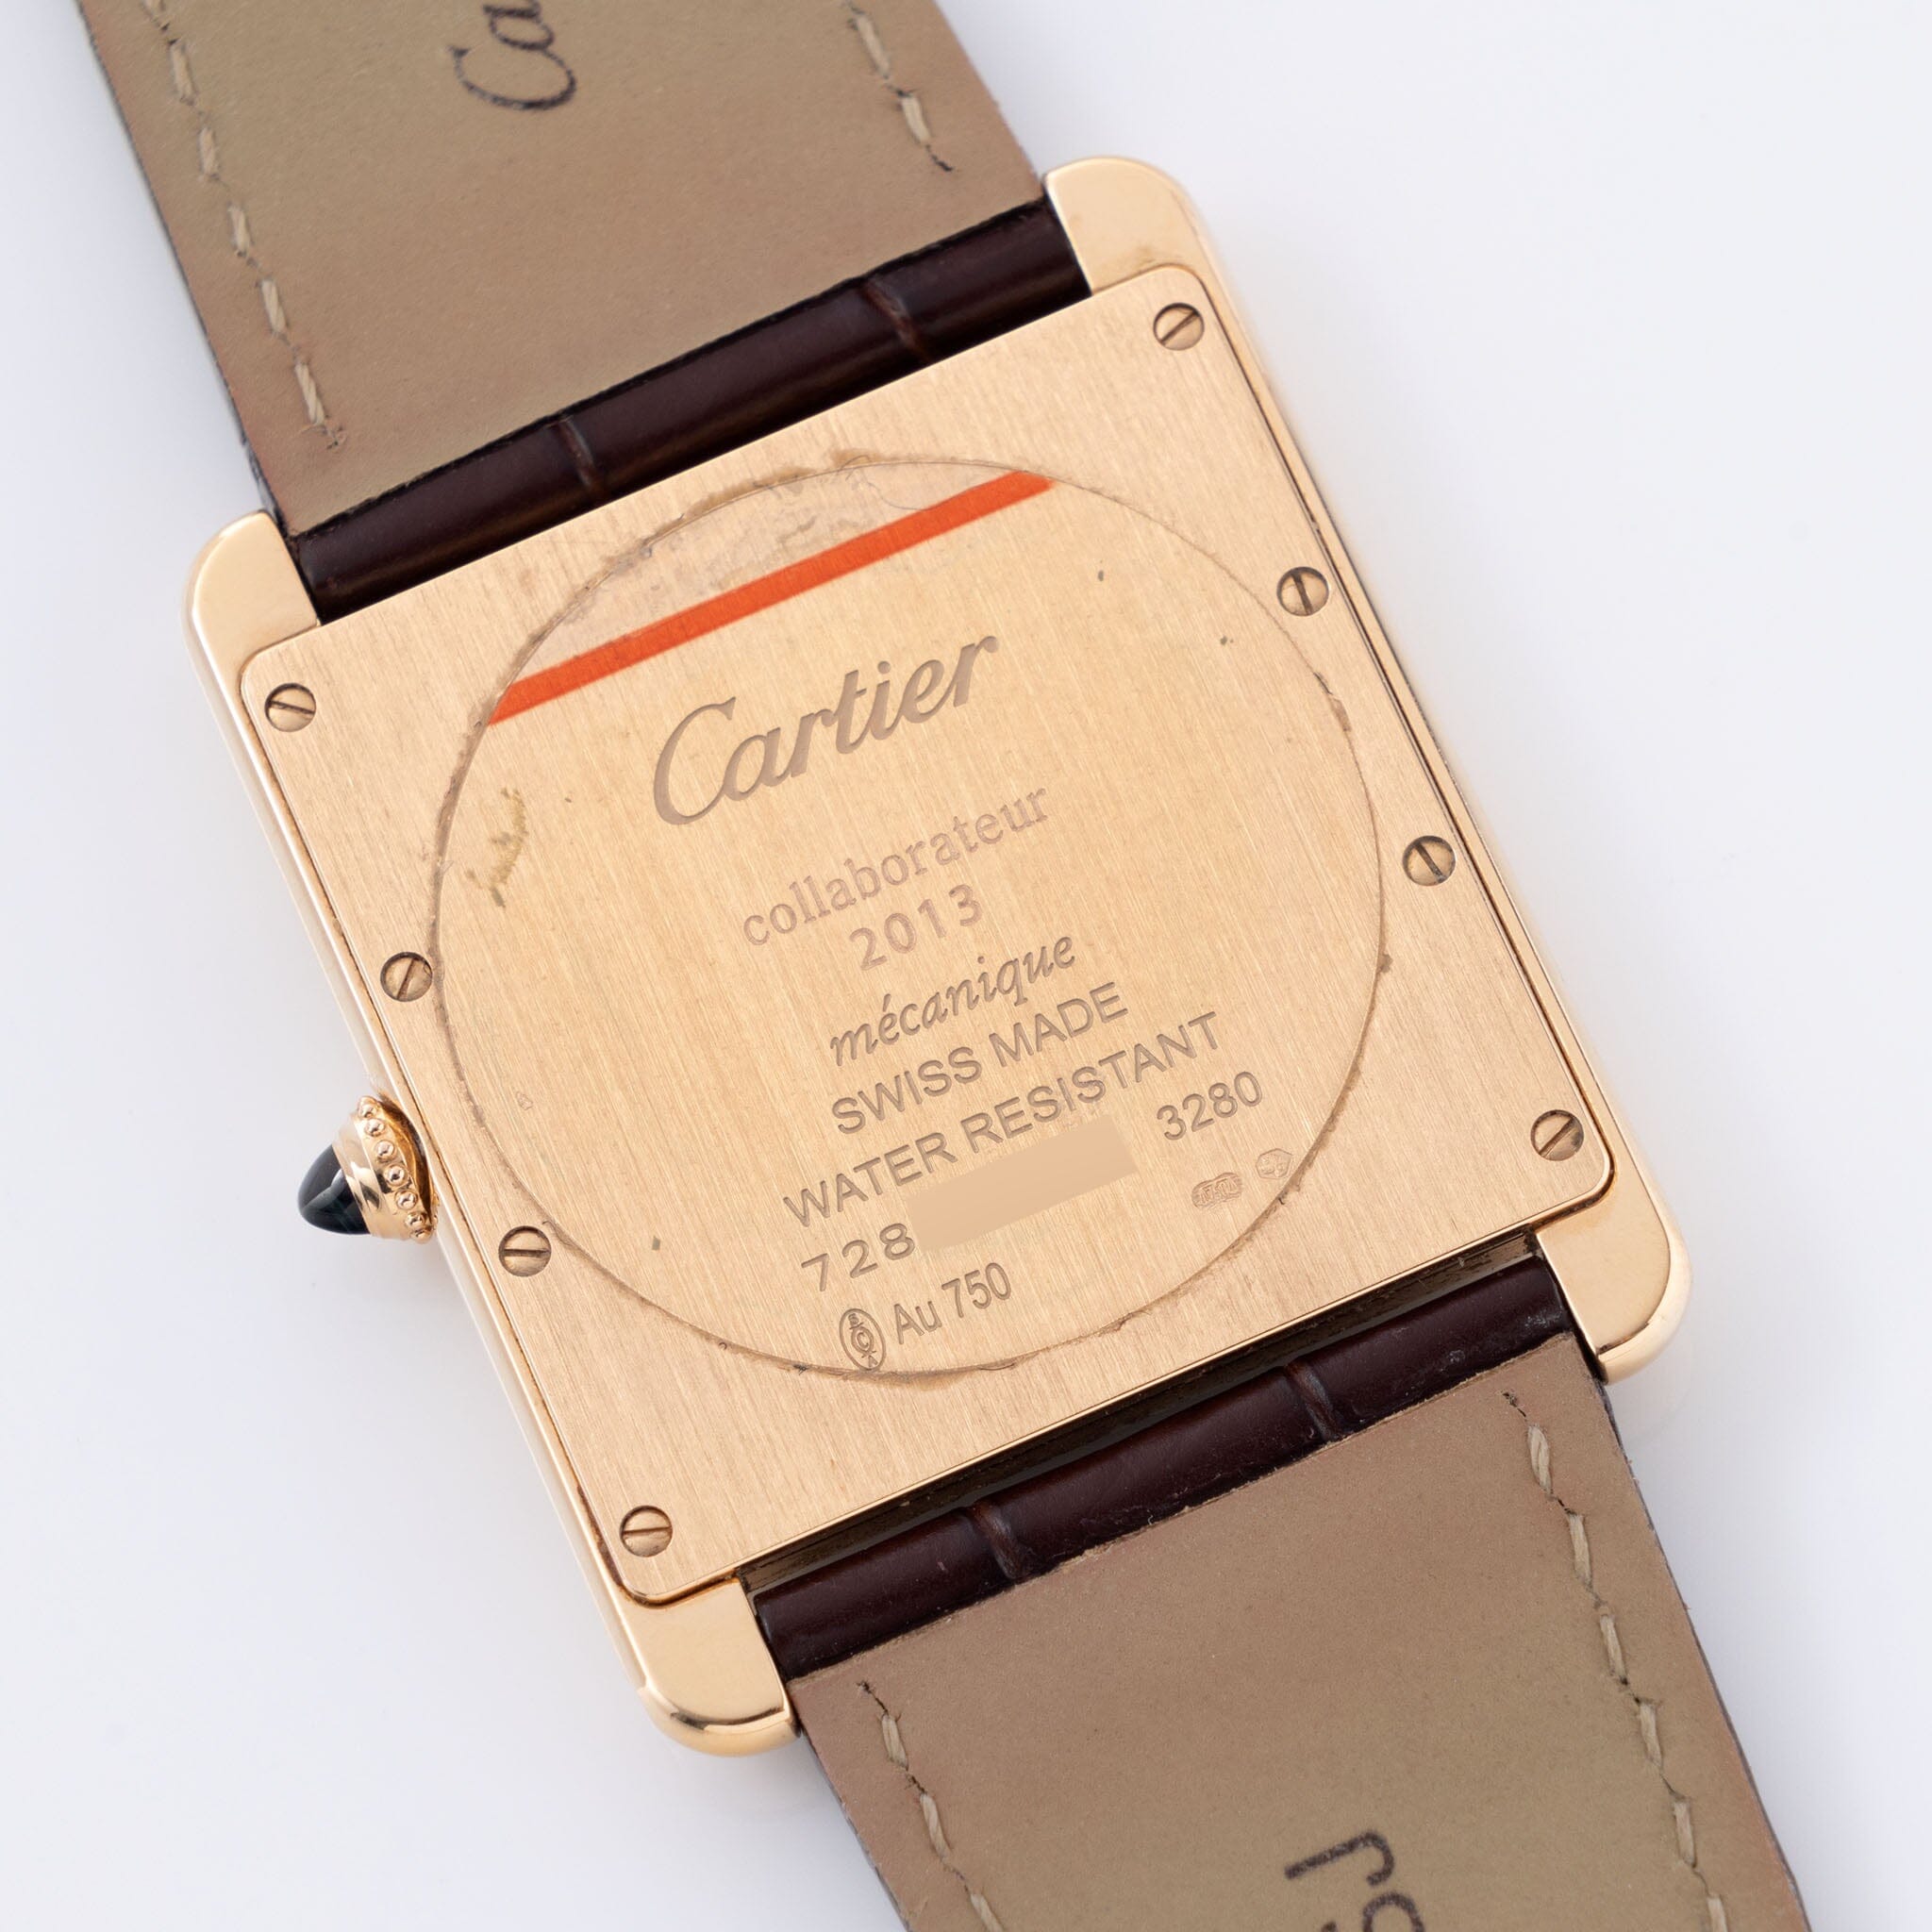 Cartier Tank Louis XL 3280 Collaborateur Edition 18kt Rose Gold Box an